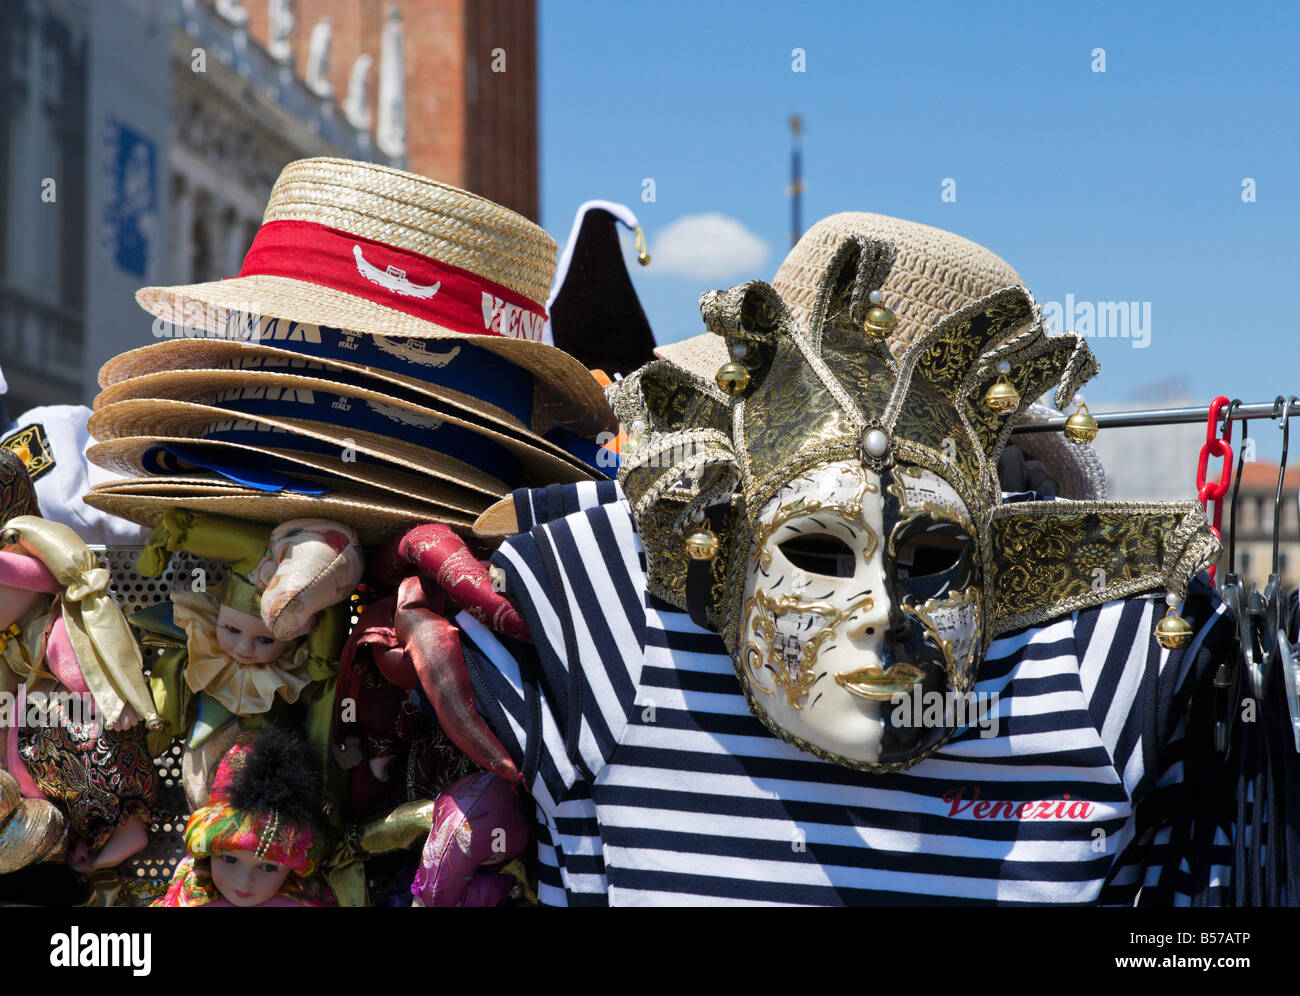 Market stall selling Venezia straw hats, shirts and carnival masks, Piazzeta, San Marco, Venice, Veneto, Italy Stock Photo